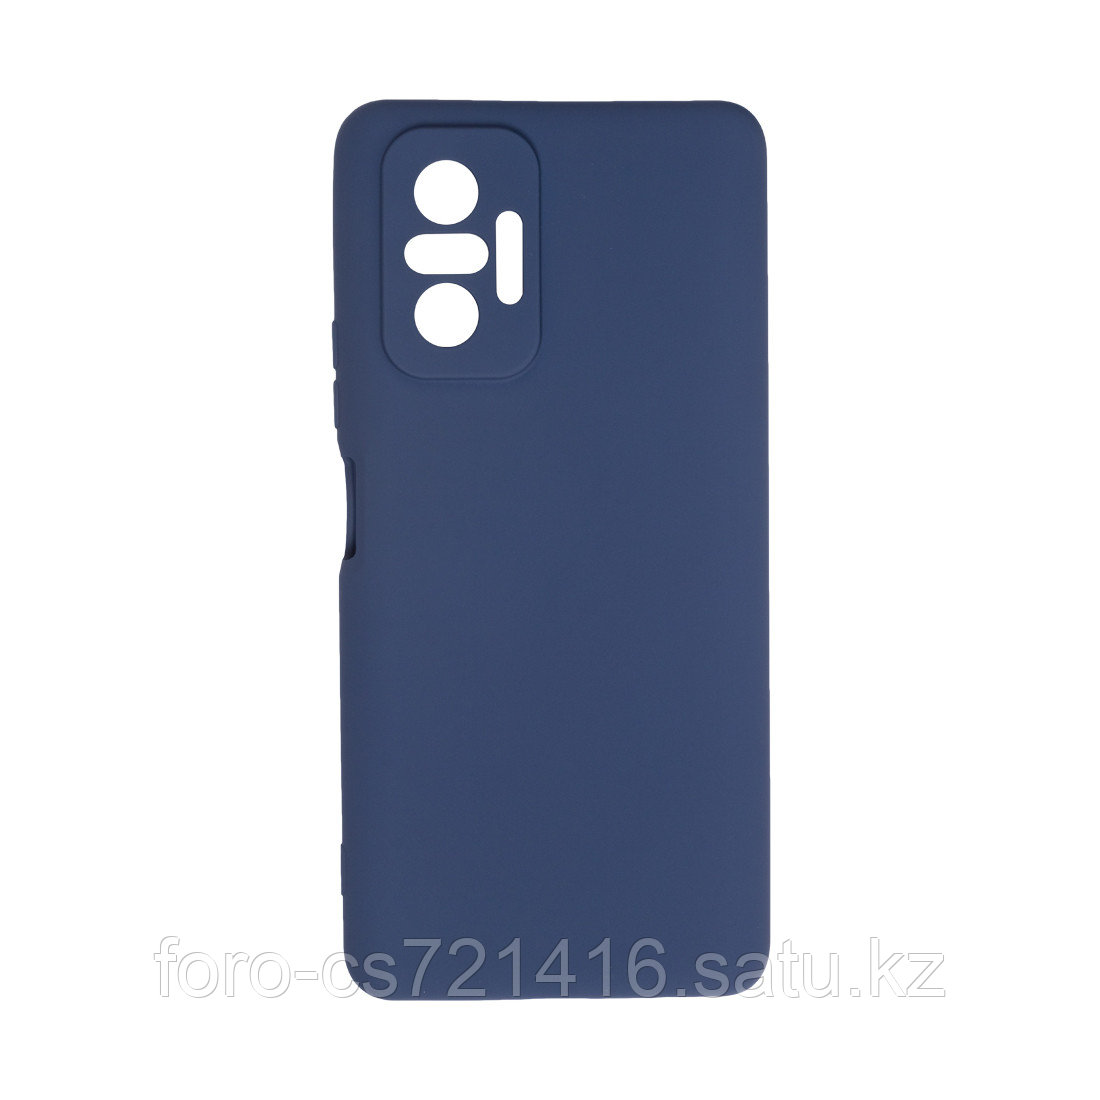 Чехол для телефона X-Game XG-HS34 для Redmi Note 10 Pro Силиконовый Тёмно-синий, фото 1